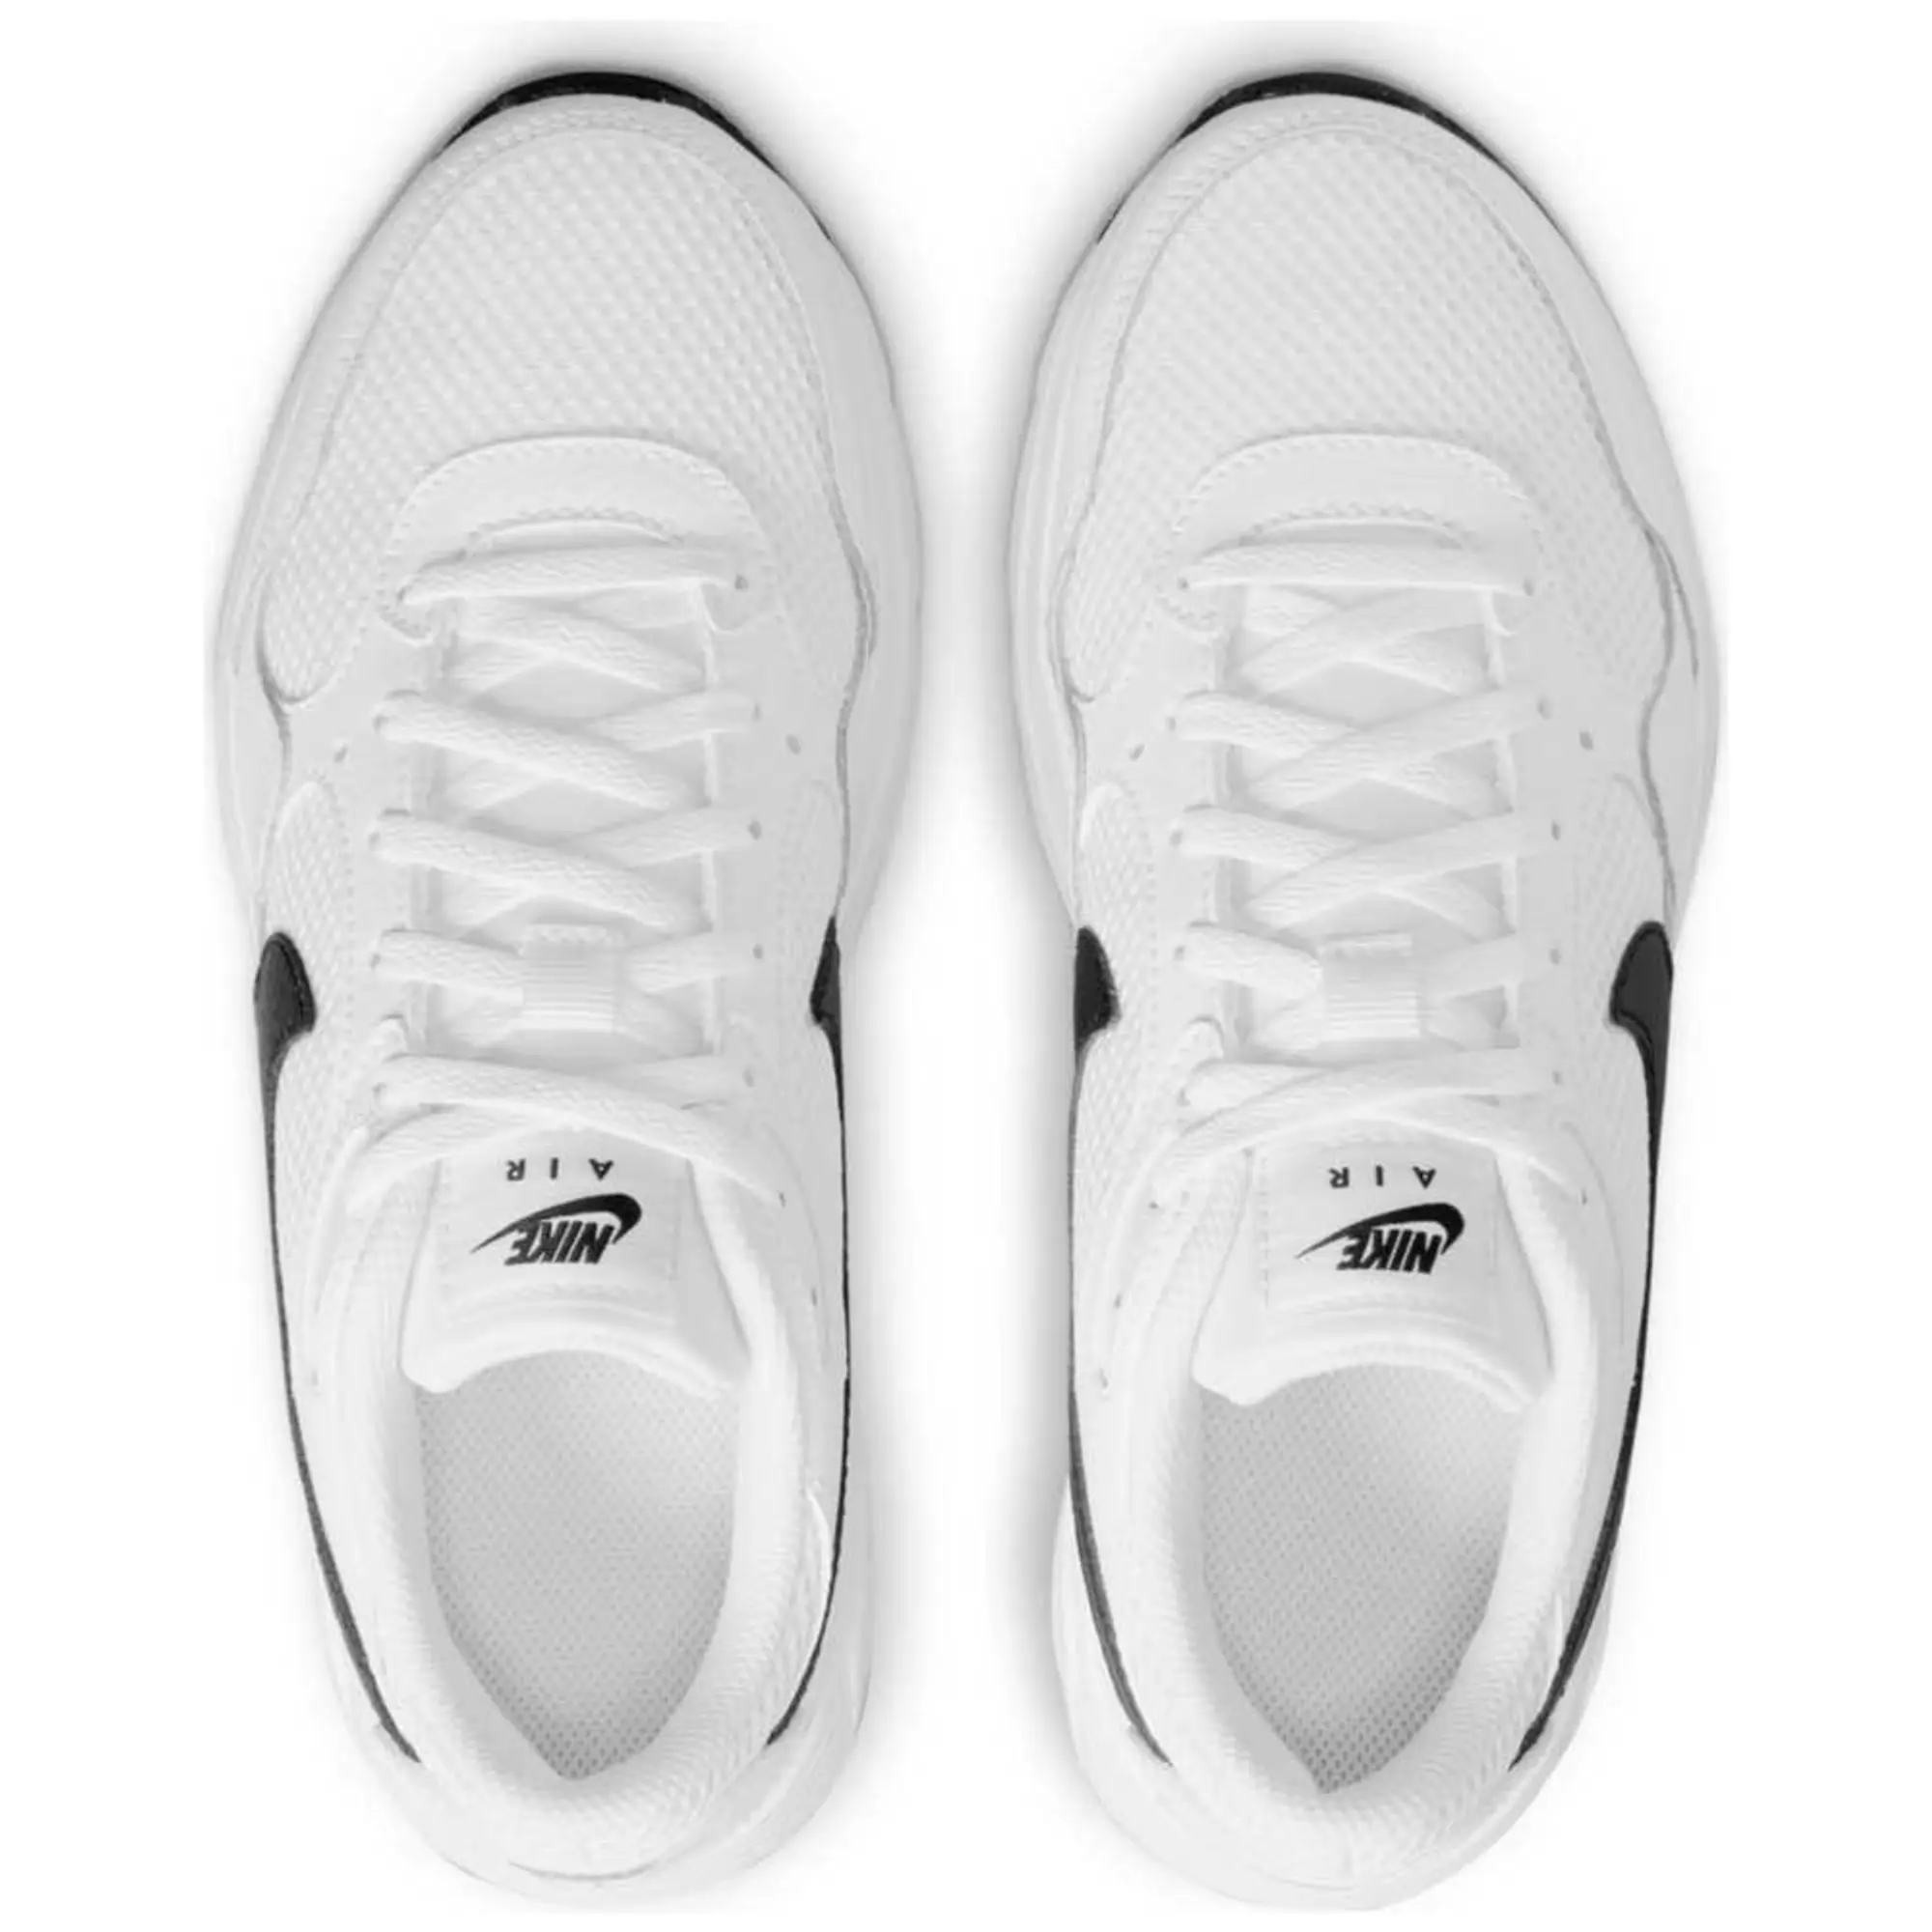 Nike Air Max SC Big Kids' Shoes - White